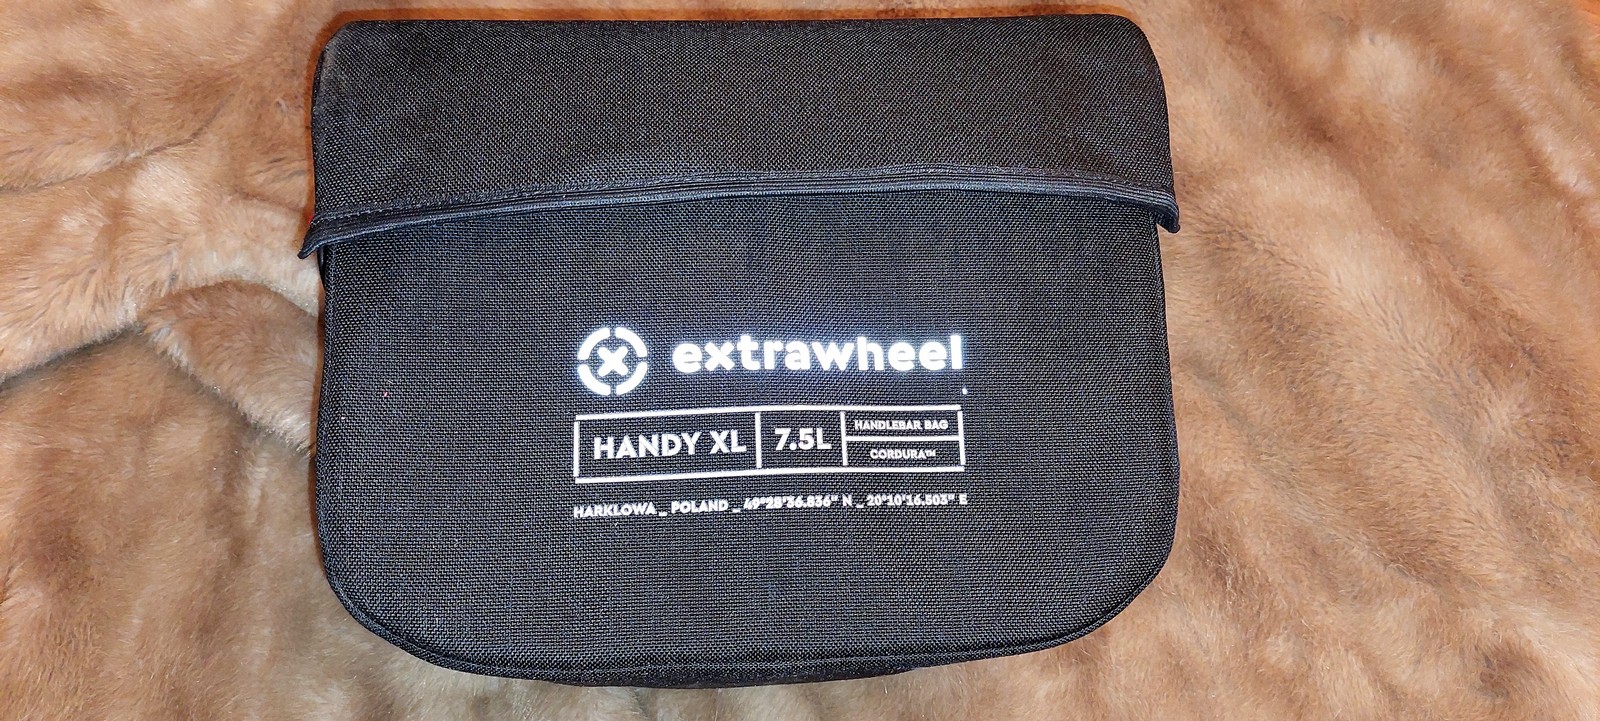 ExtraWheel HandyXL Test Odblask